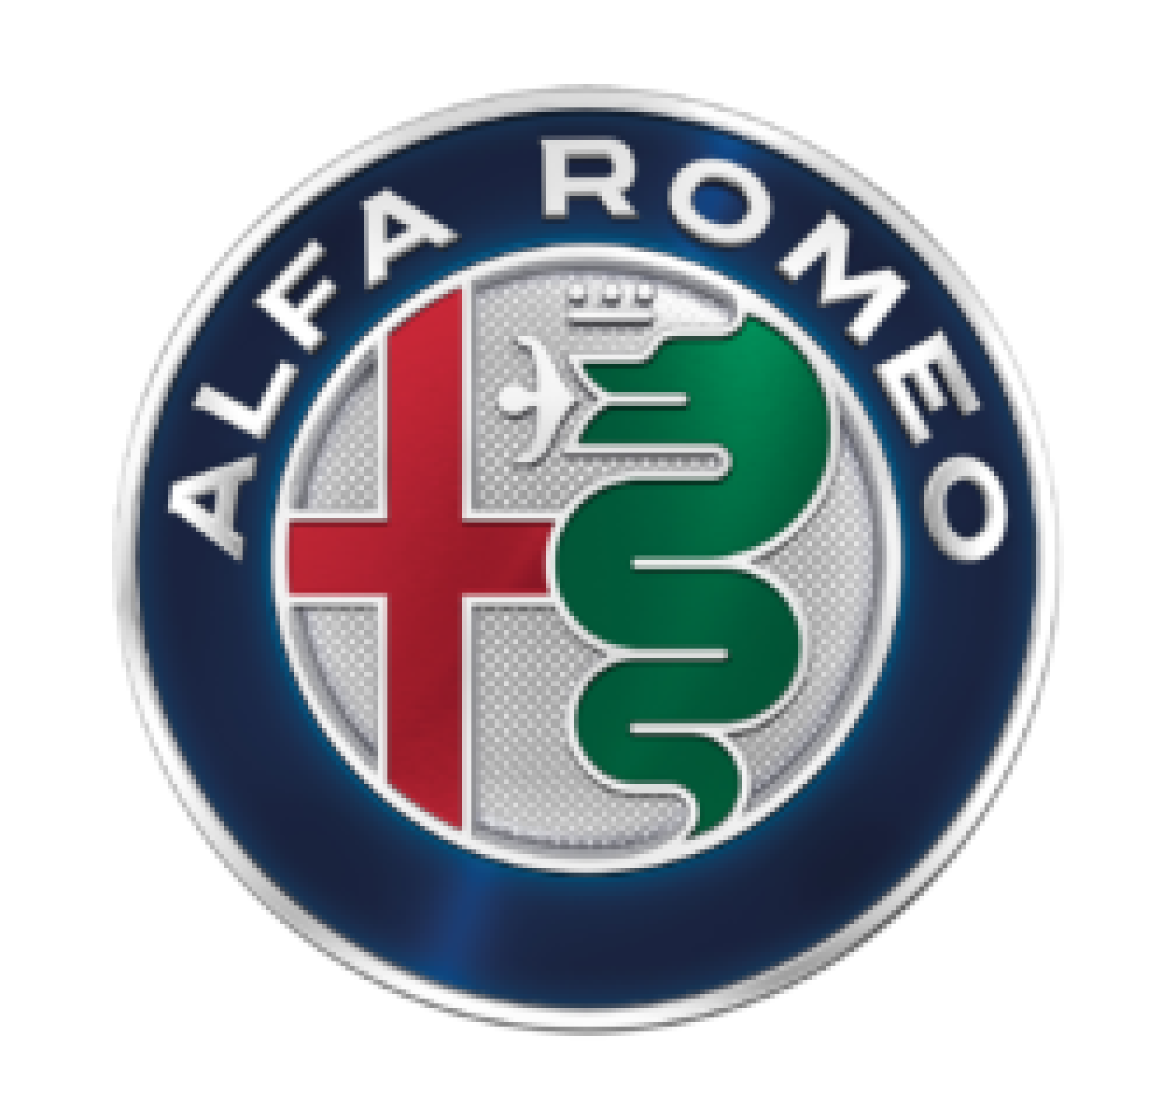 Alfa-Romeo-logo-2015-1920x1080